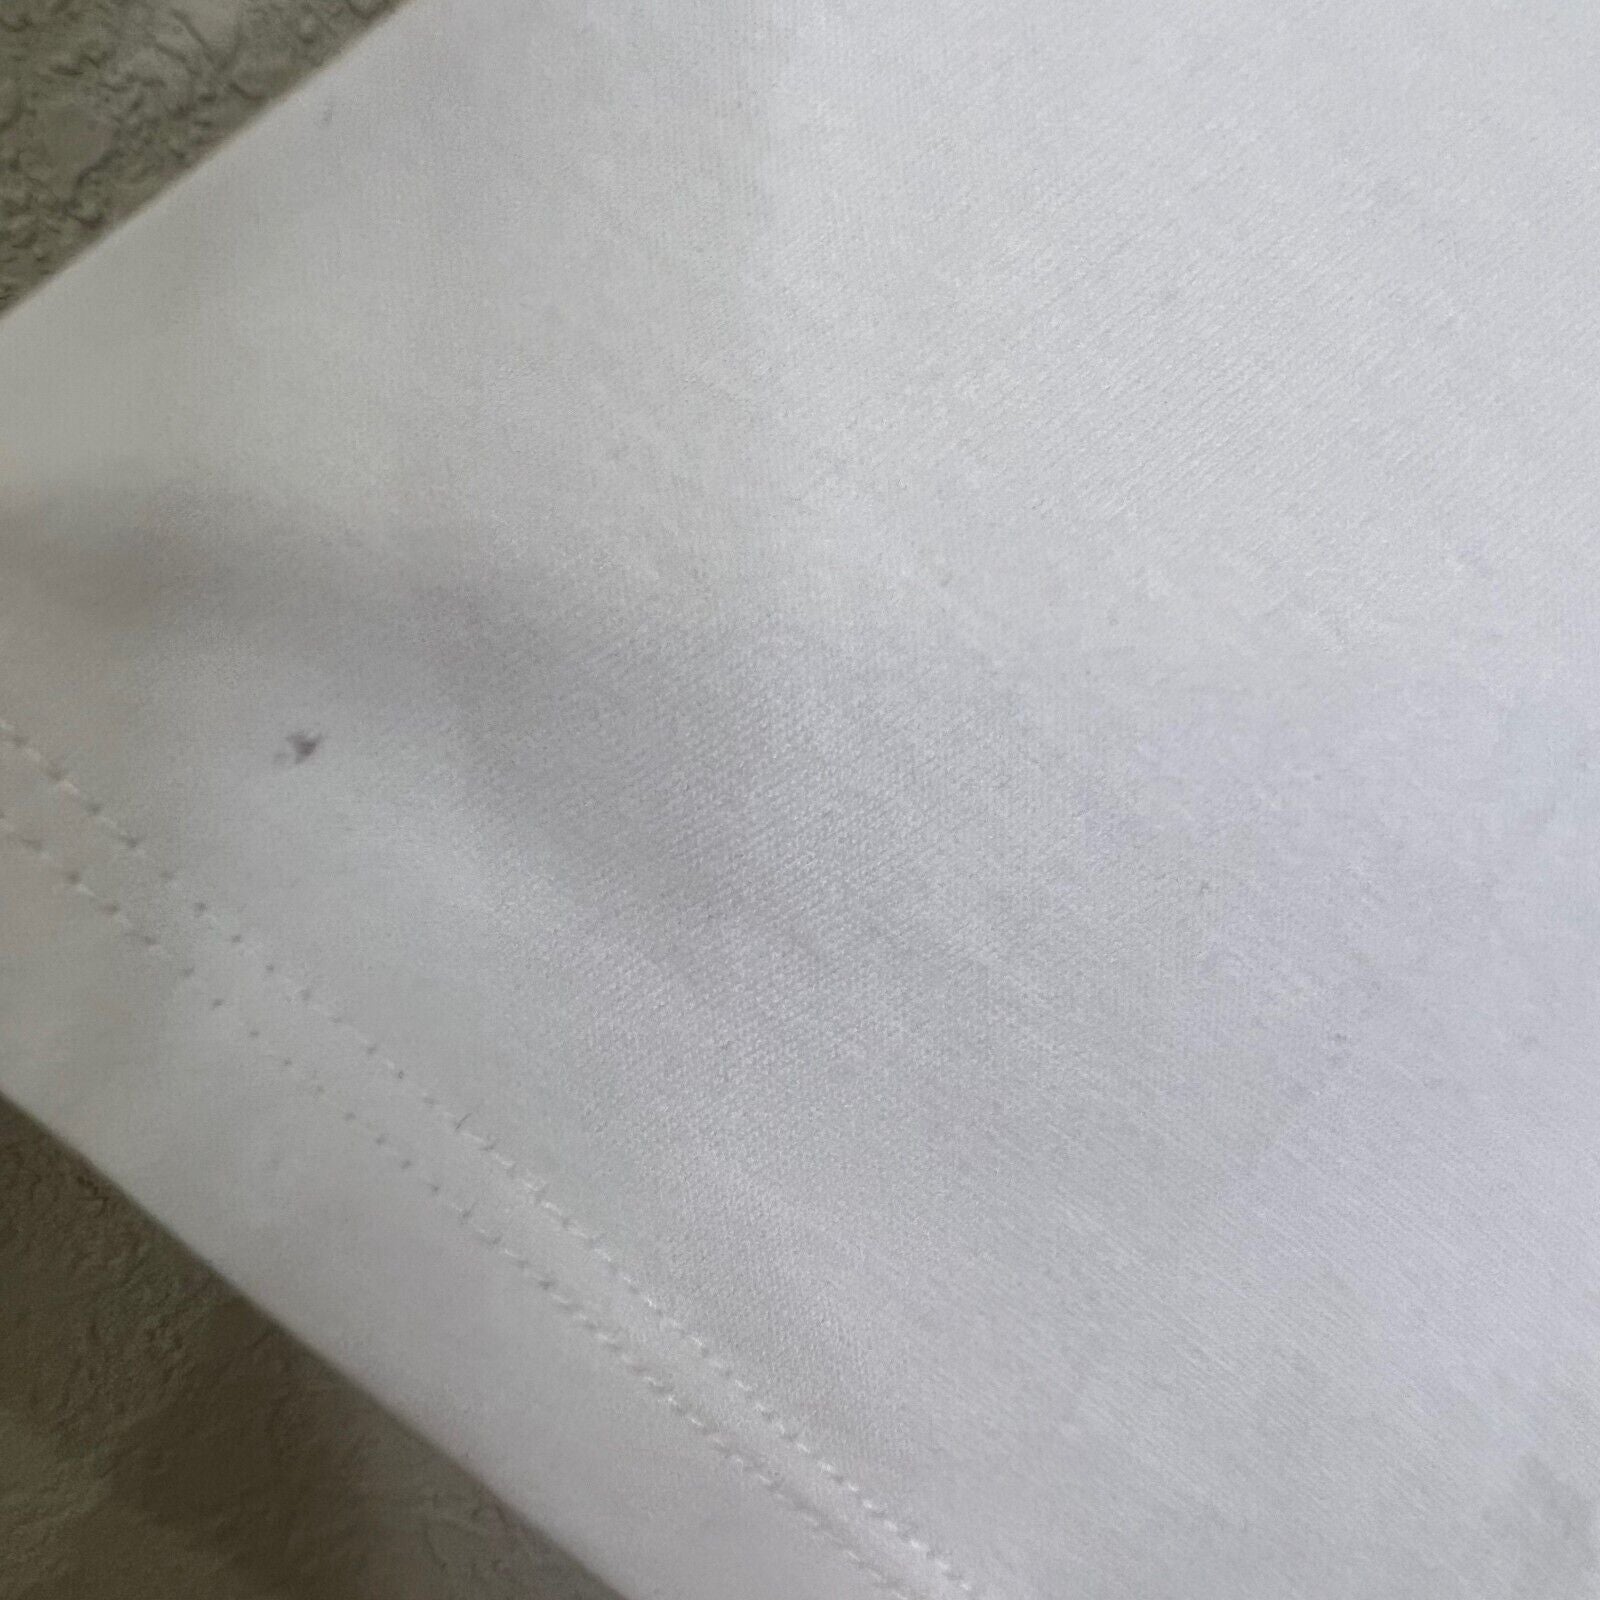 Natori Embroidered Cotton T Shirt Tee in White Size Medium NEW